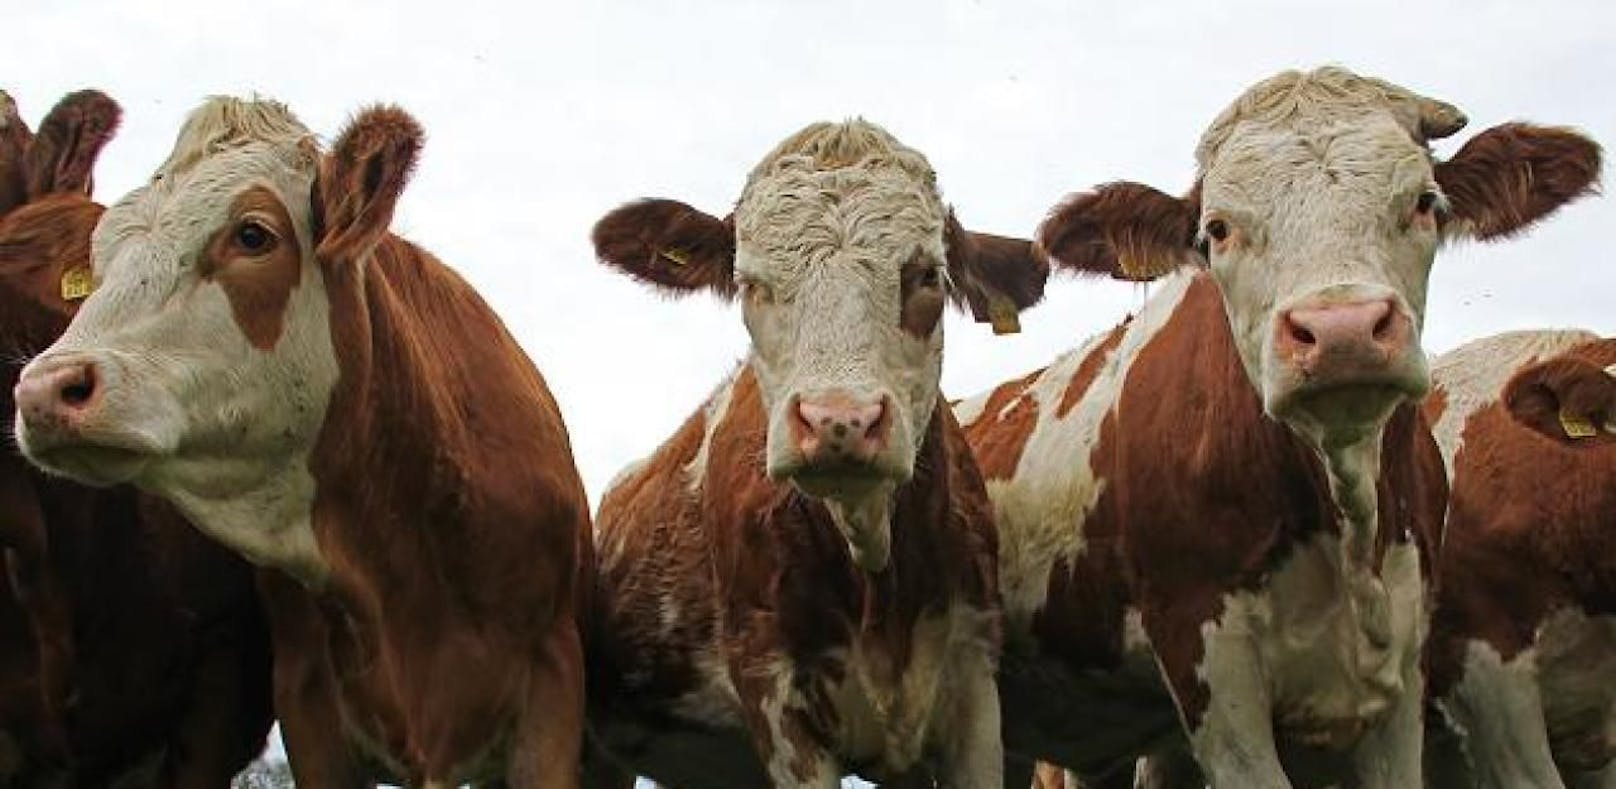 Kühe trampelten Frau tot: Witwer verklagt Landwirt